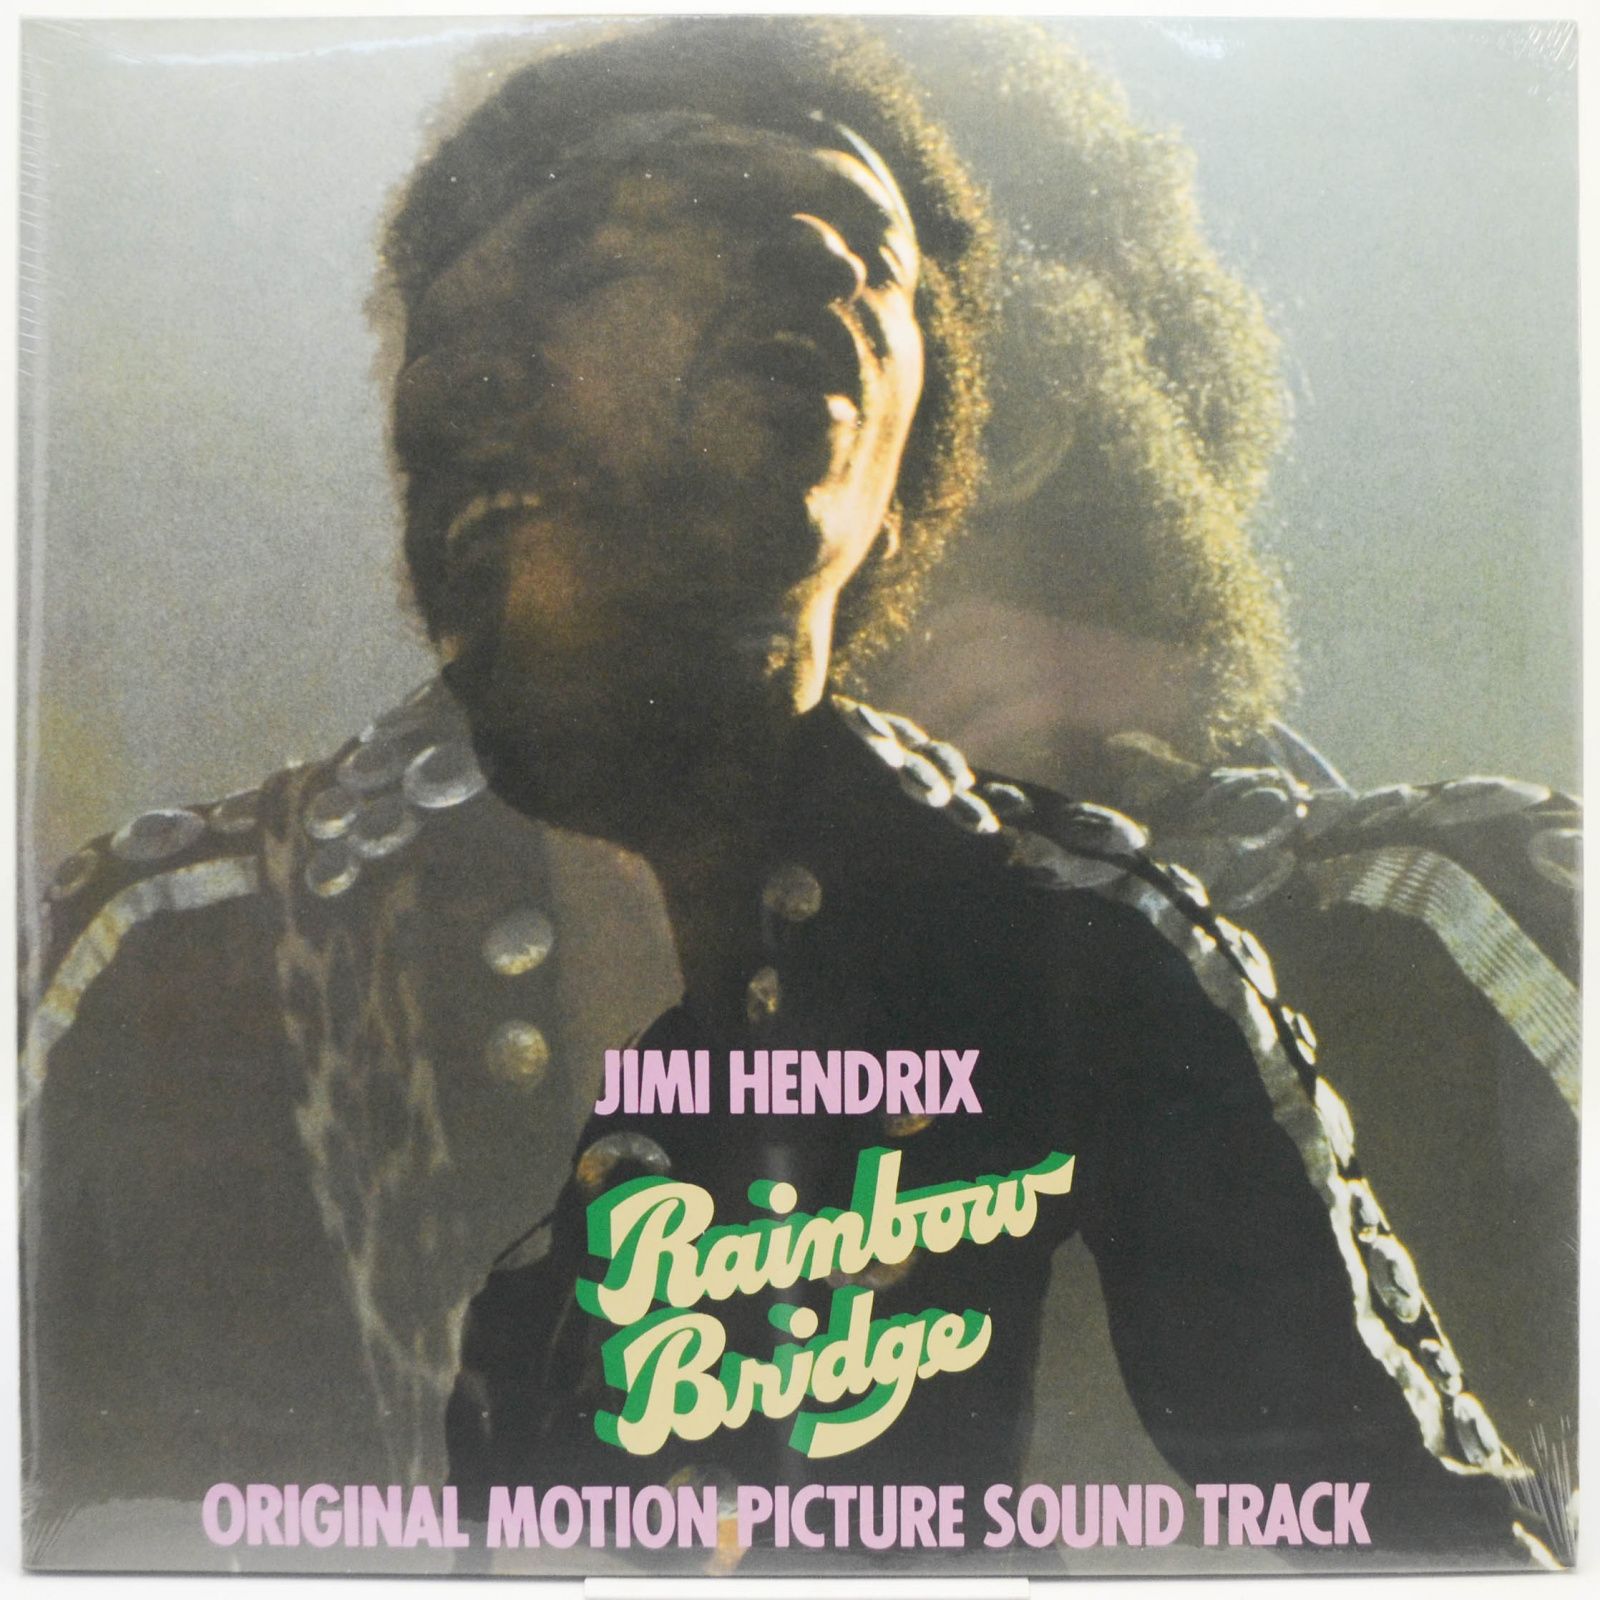 Jimi Hendrix — Rainbow Bridge - Original Motion Picture Sound Track, 2014